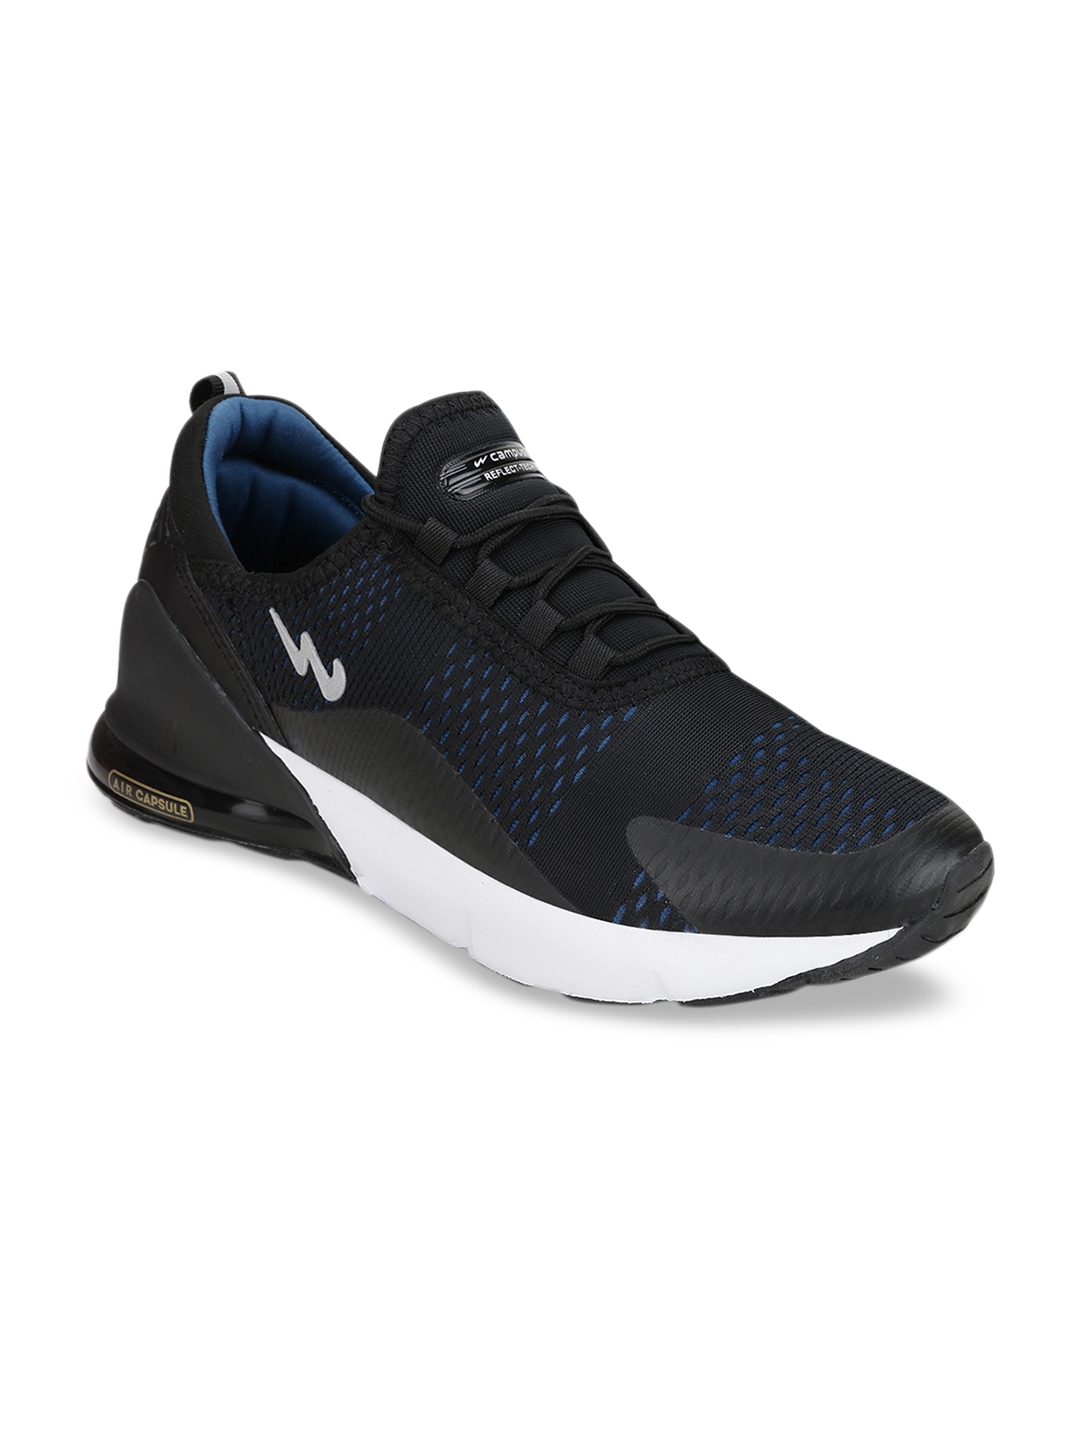 Buy Campus Men Black Mesh Running Shoes - Sports Shoes for Men 11185282 ...